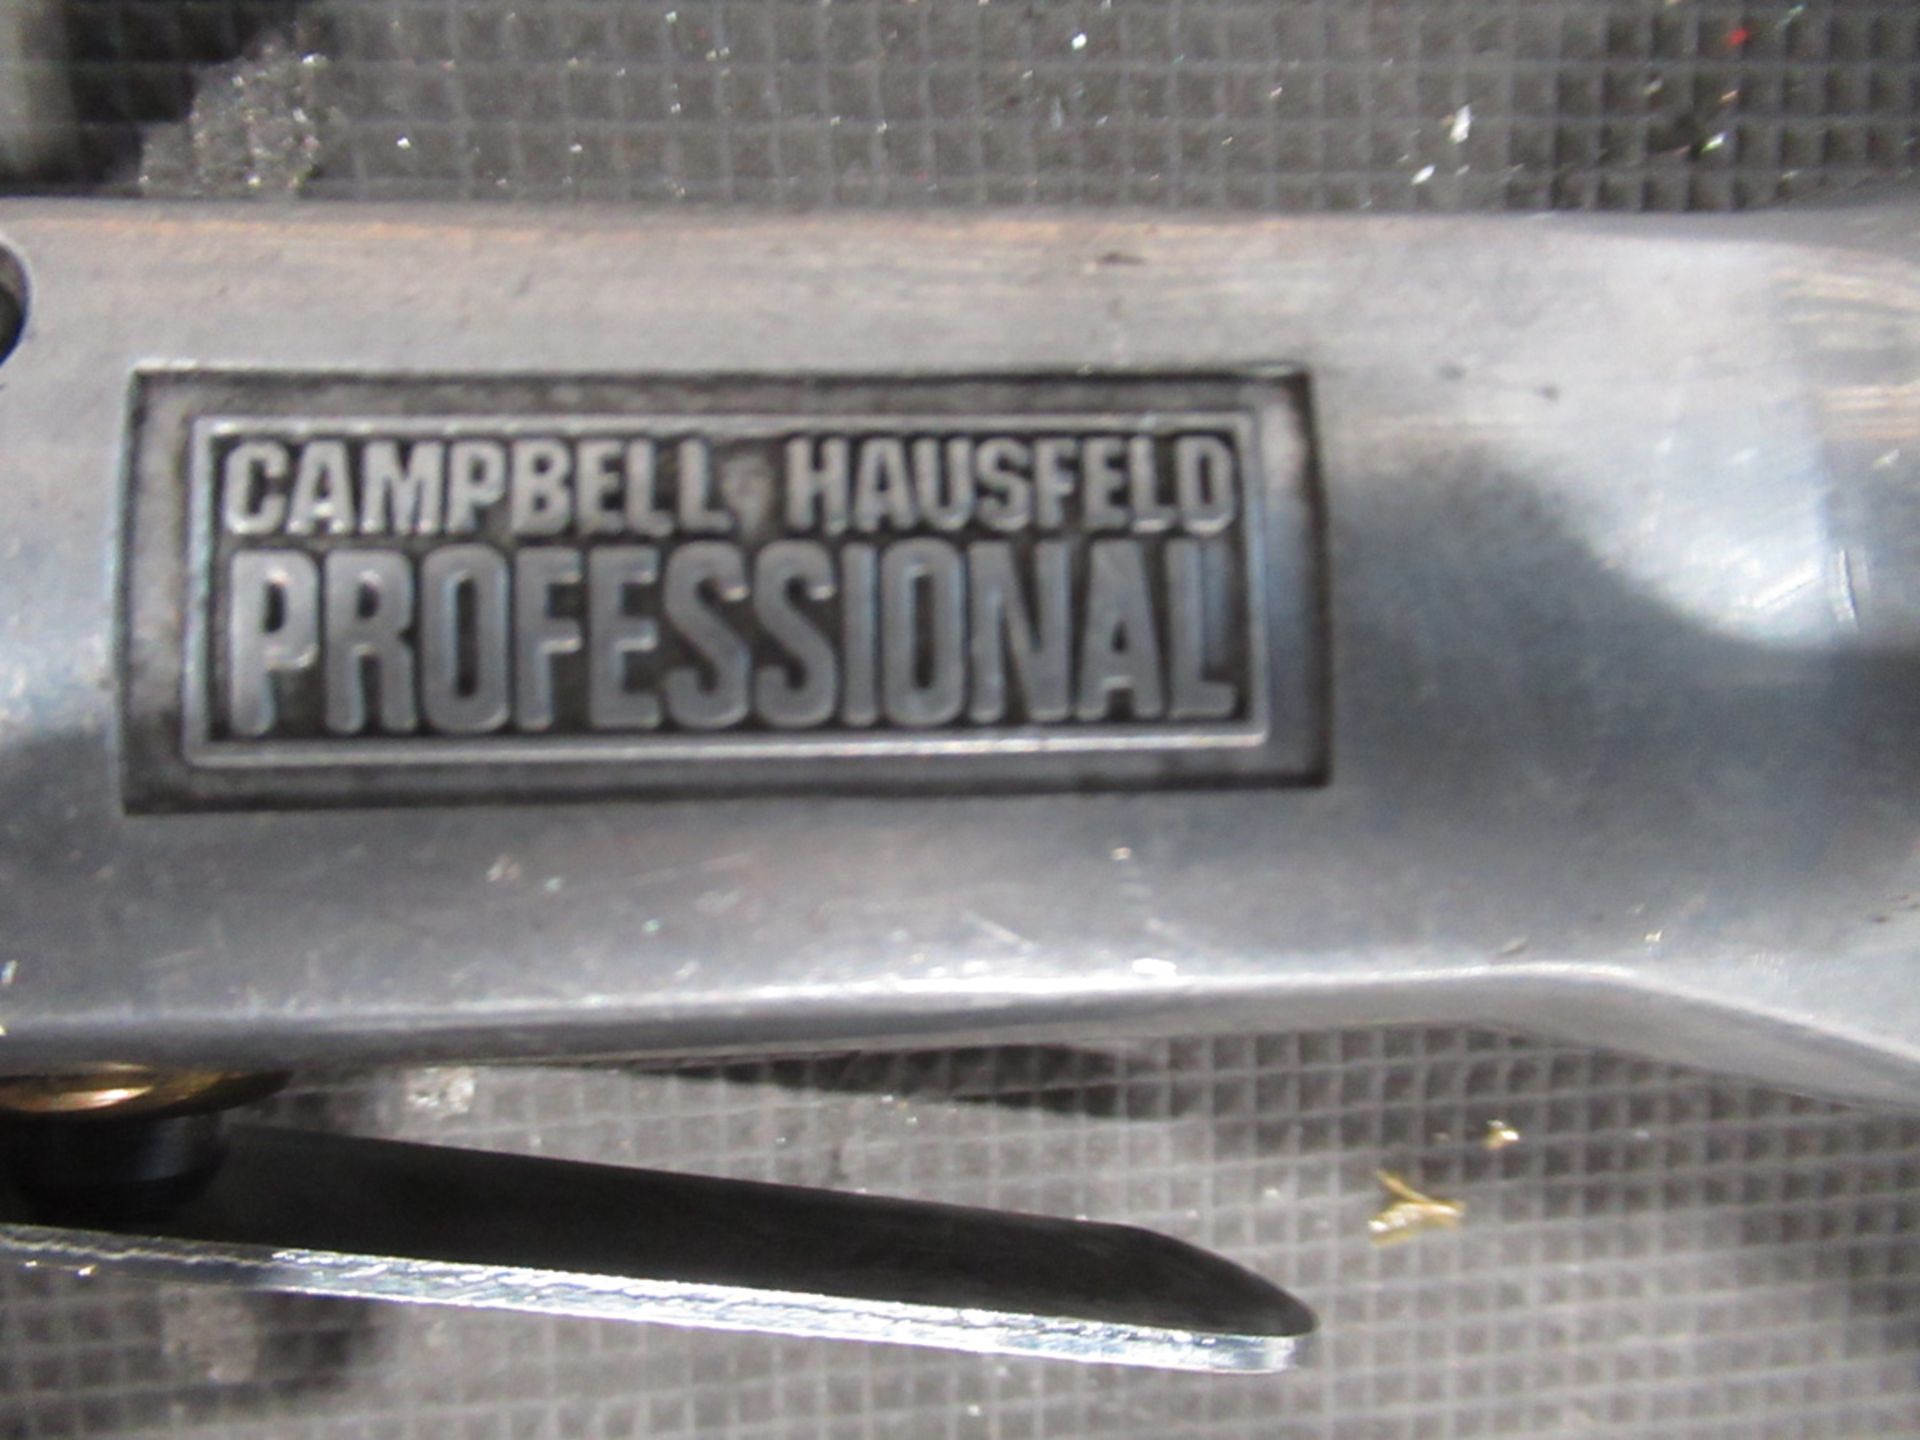 CAMPBELL HAUSFELD 3/8" PNEUMATIC RATCHET - Image 3 of 3